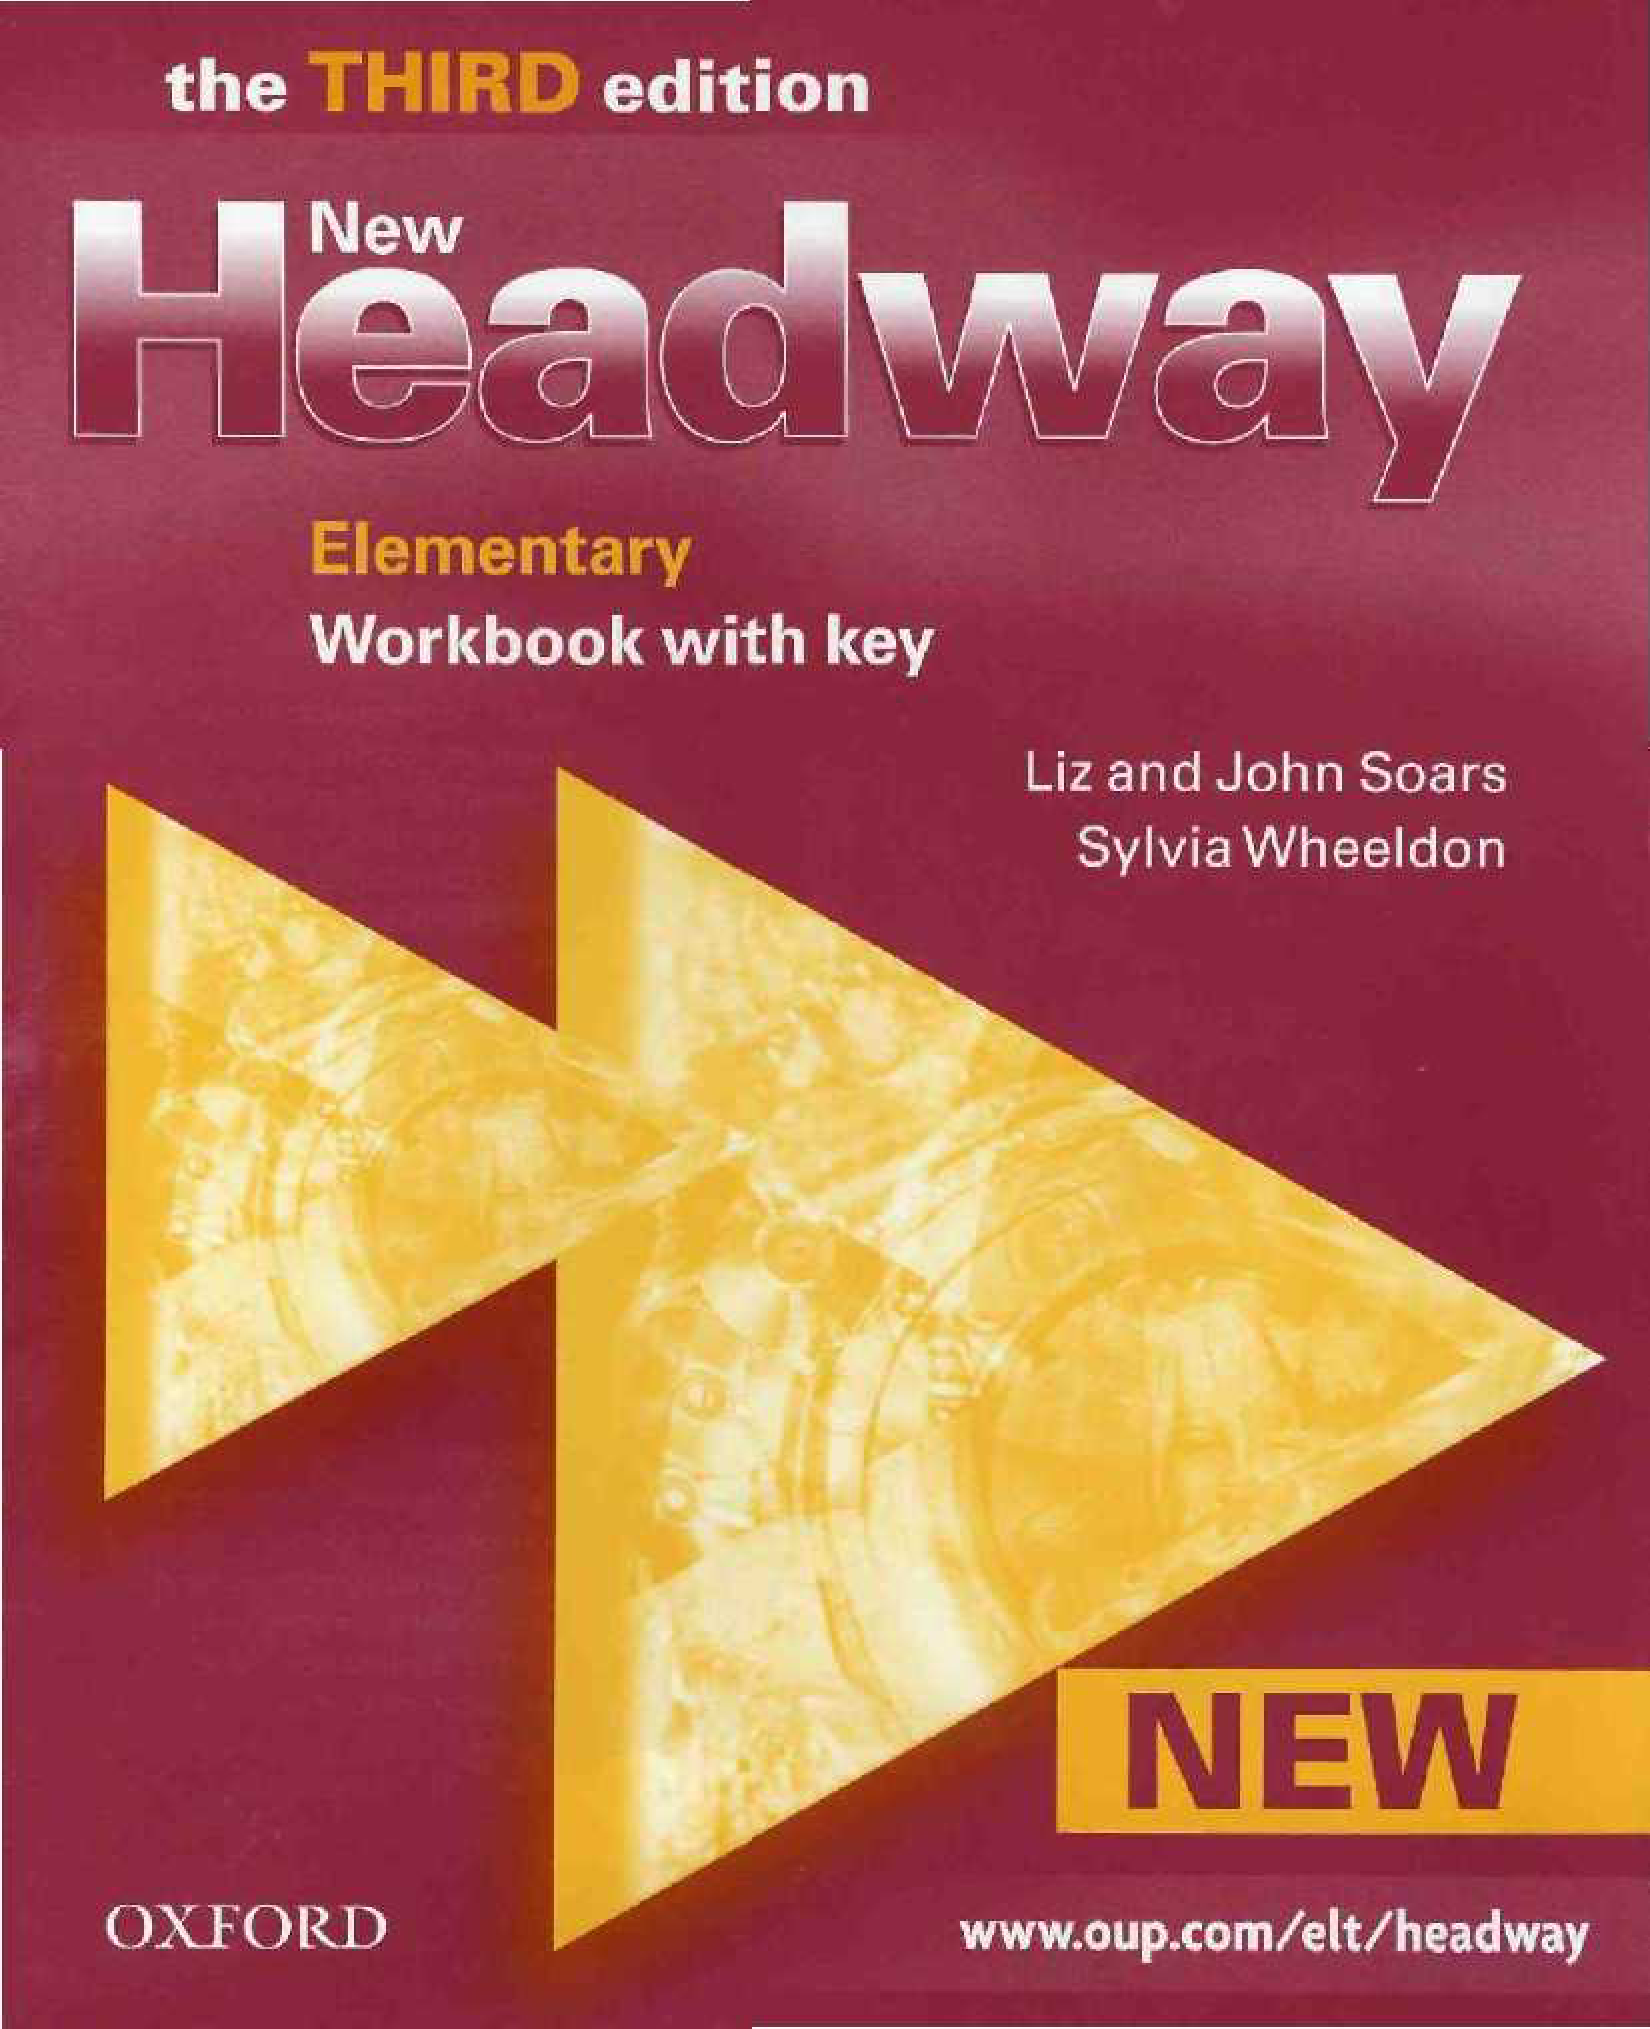 Headway elementary workbook. New Headway 3rd Edition Elementary Workbook. New Headway Elementary Audio 3rd Edition. New Headway Elementary Liz and John Soars Sylvia Wheeldon. Headway Elementary Workbook book.